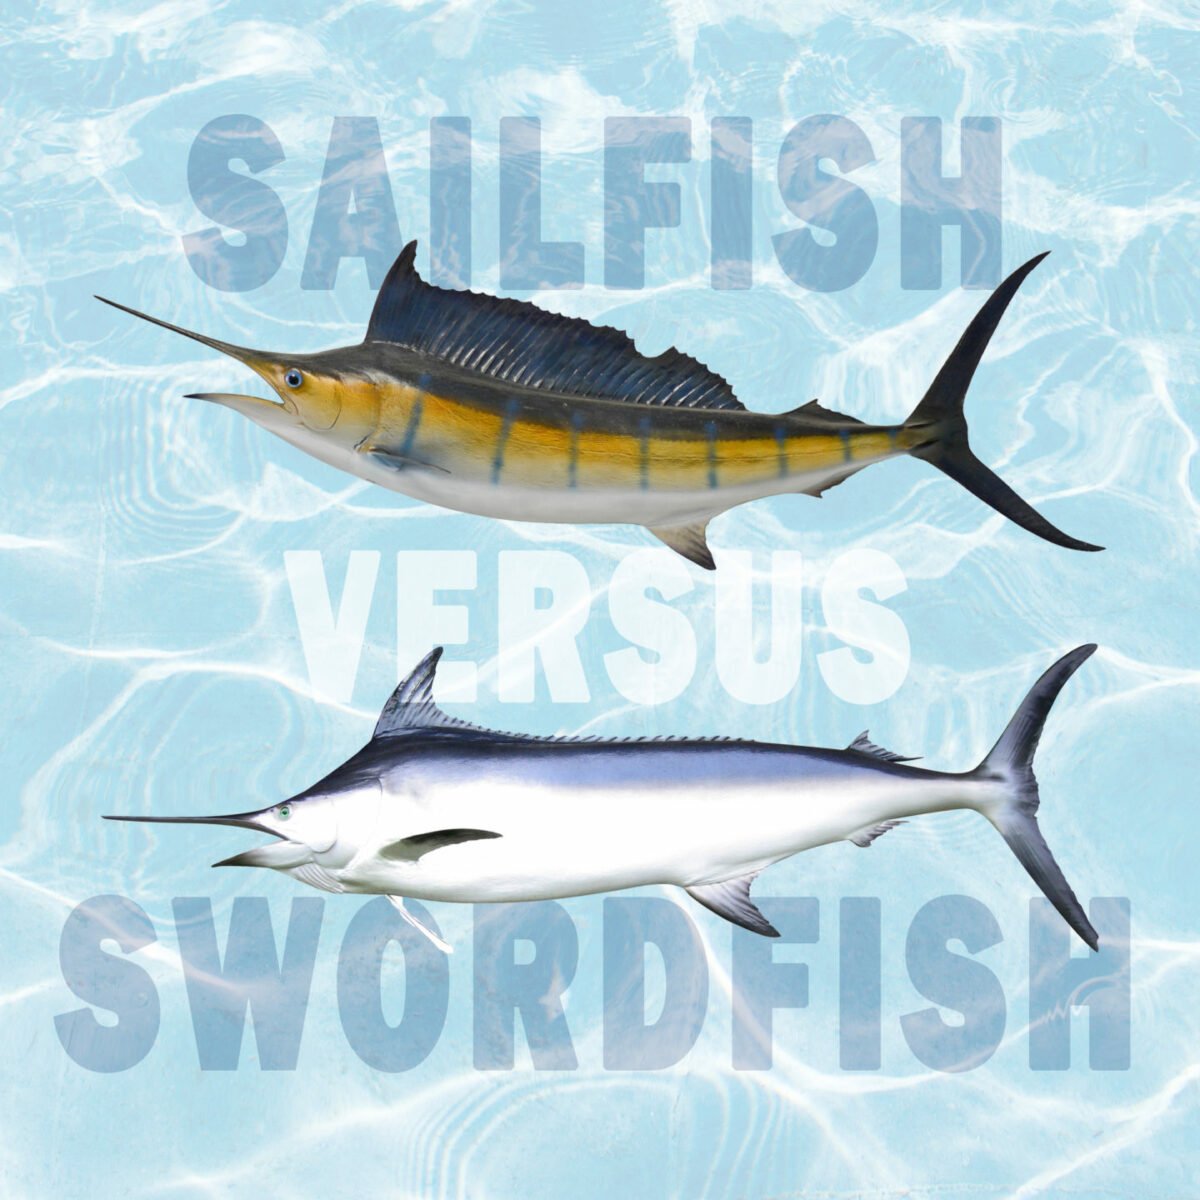 sailfish vs swordfish differences